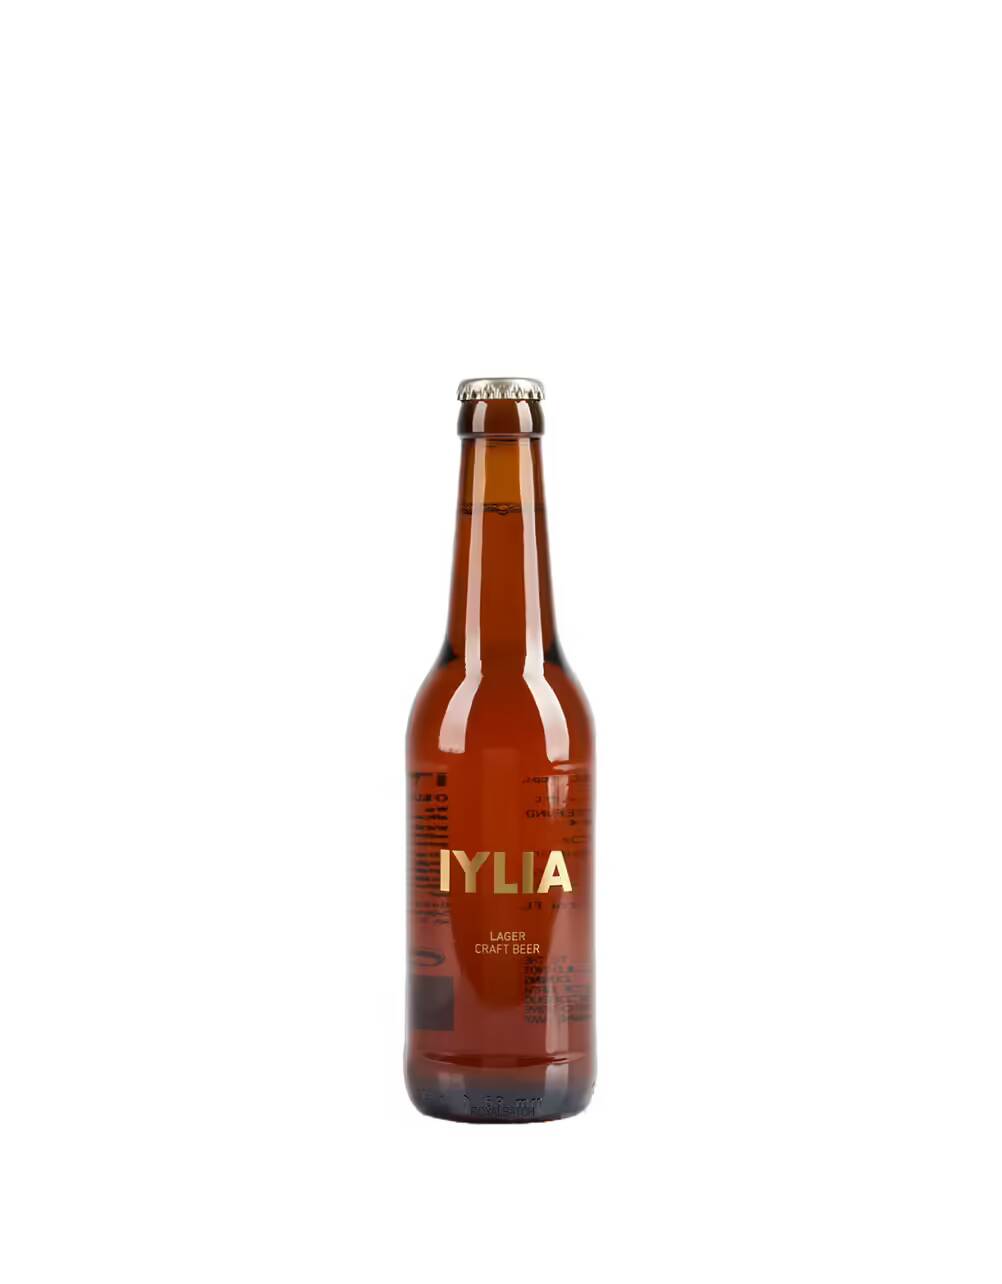 IYLIA Lager Craft Beer 330ml